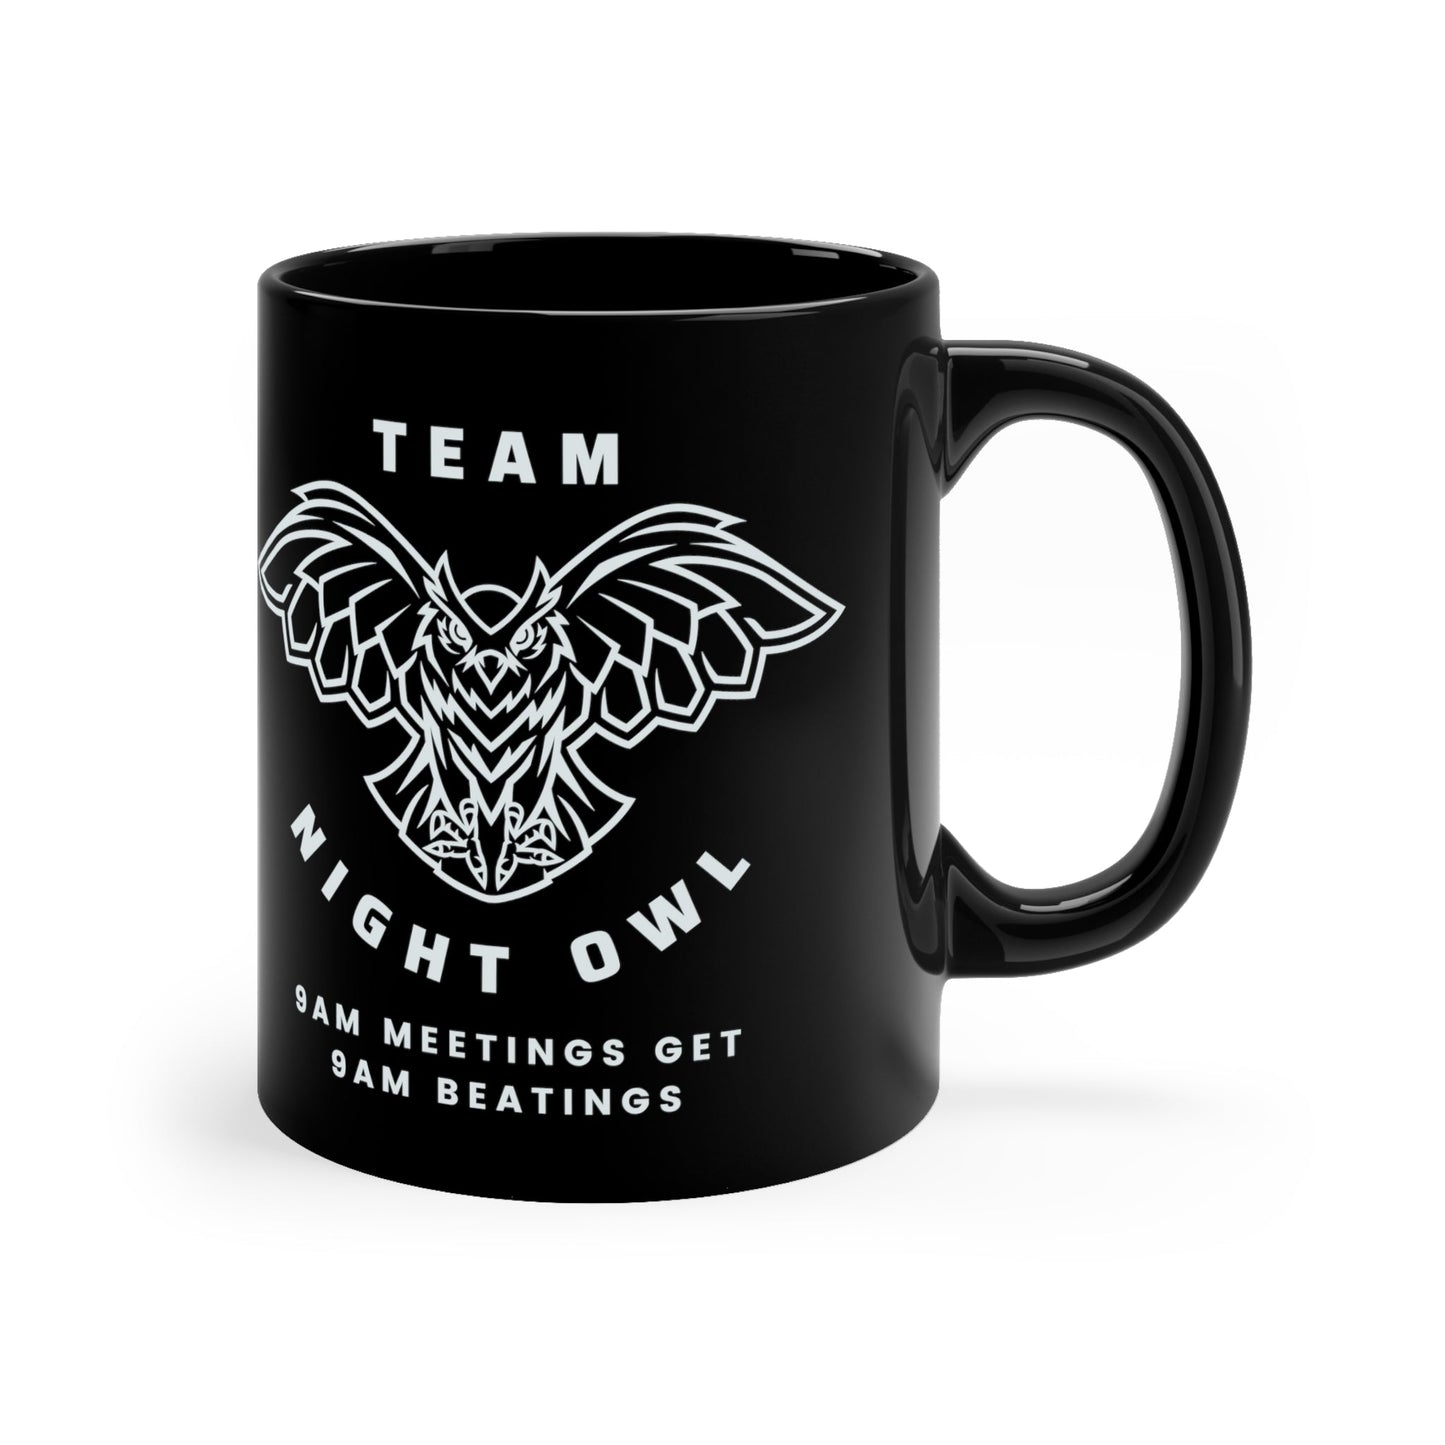 Team Night Owl: 9am Meetings Get 9am Beatings 11oz Black Mug